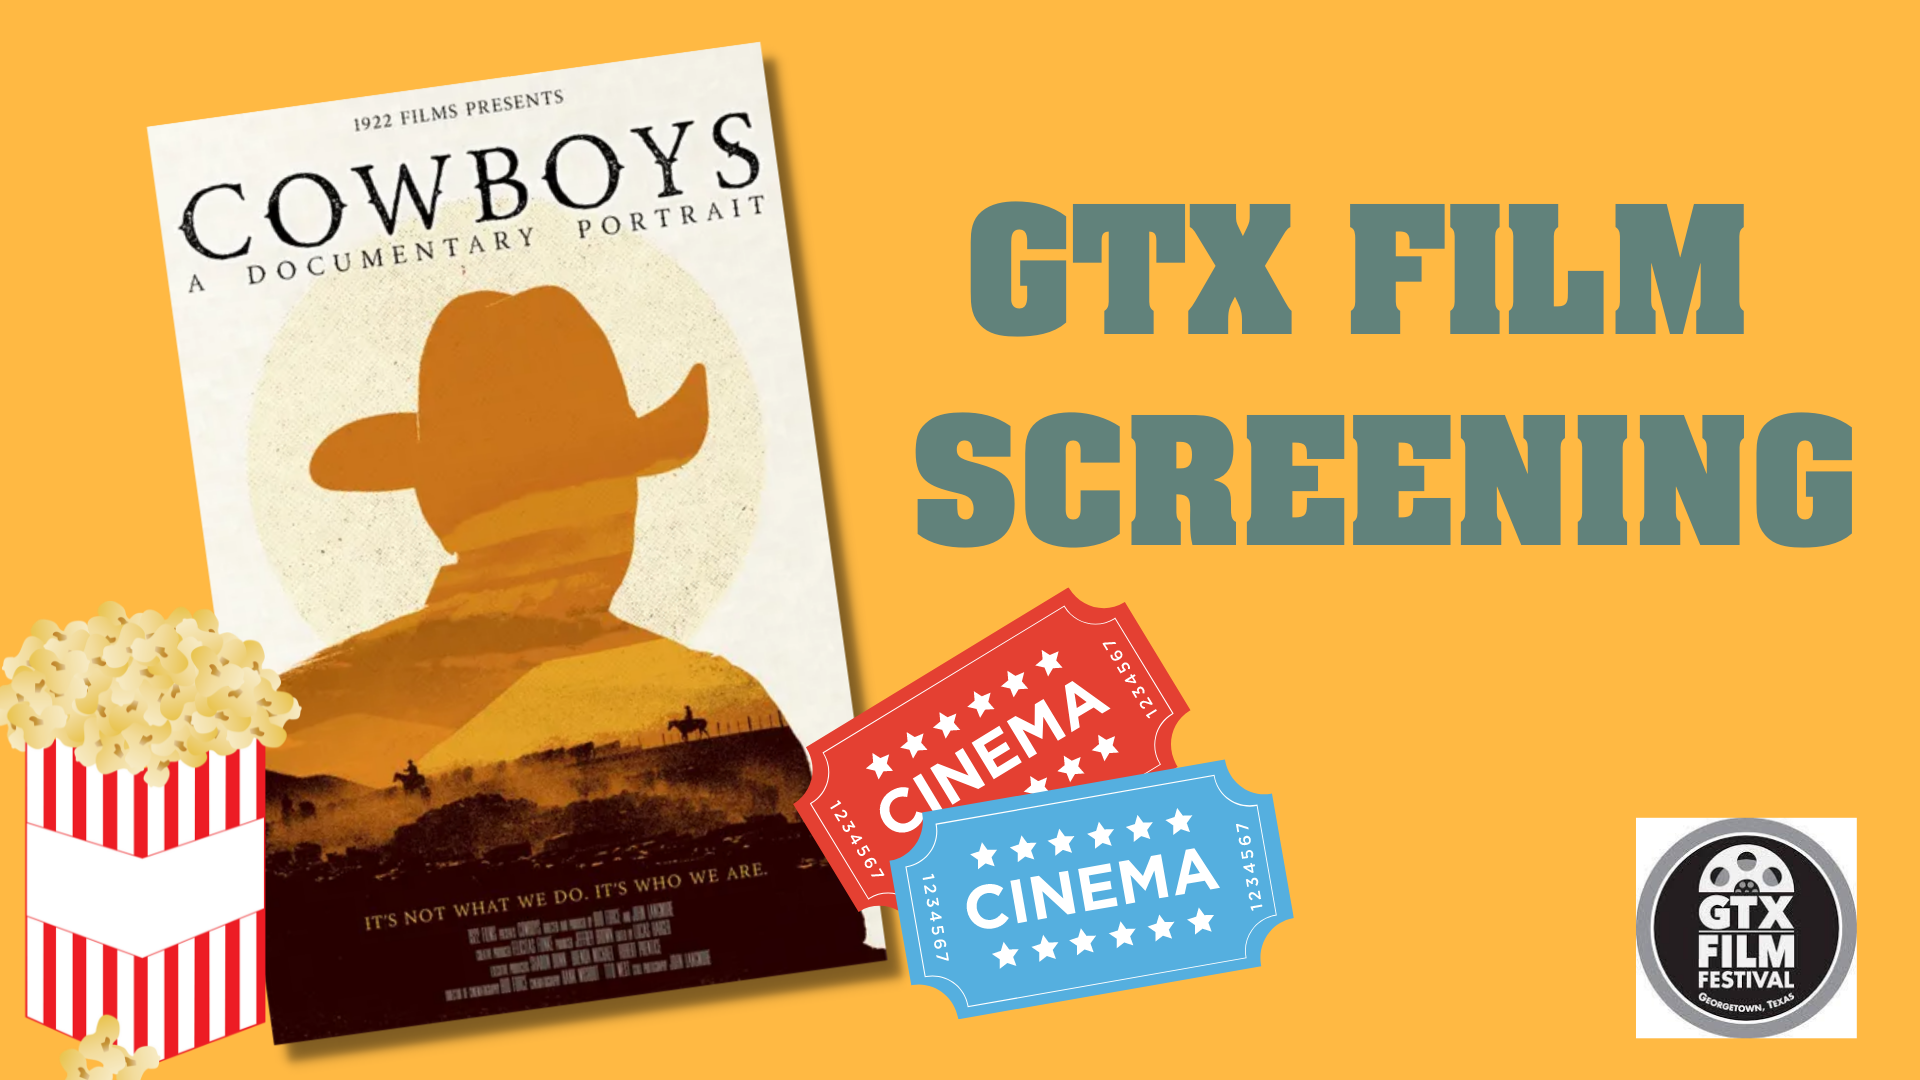 GTX Film screening of COWBOYS